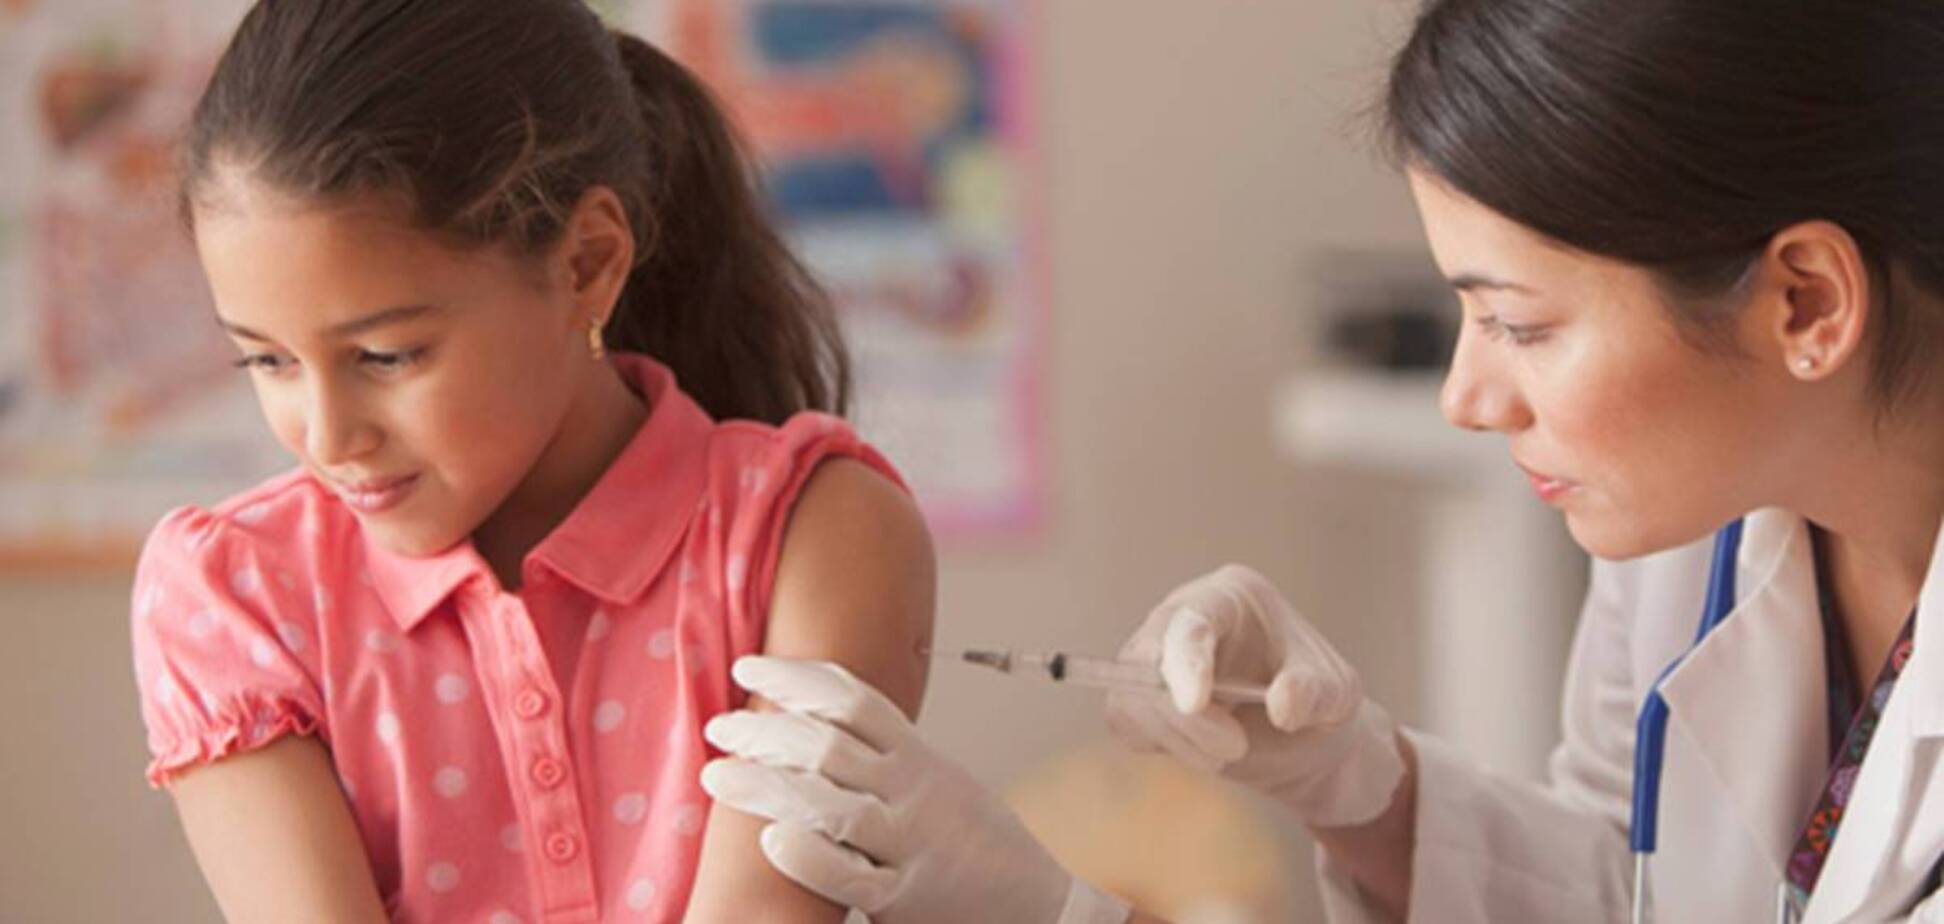 В США испытают вакцину от COVID-19 на детях